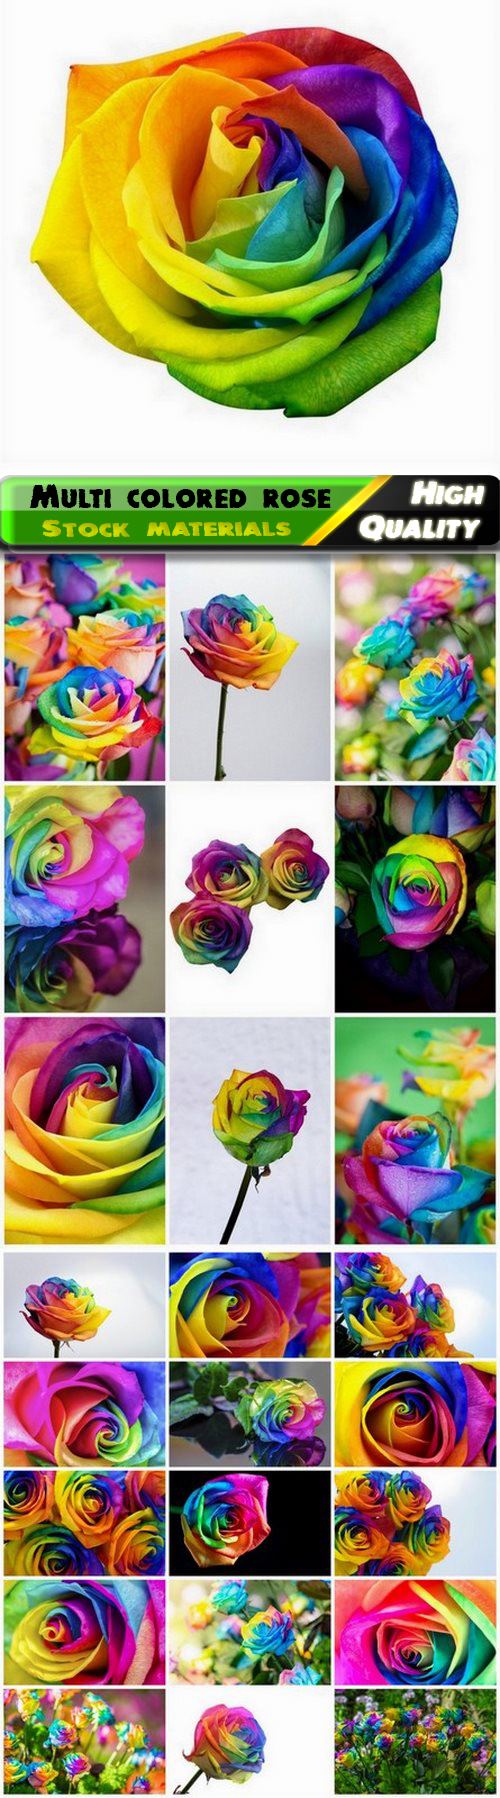 Beautiful flower is multi colored rainbow rose - 25 HQ Jpg